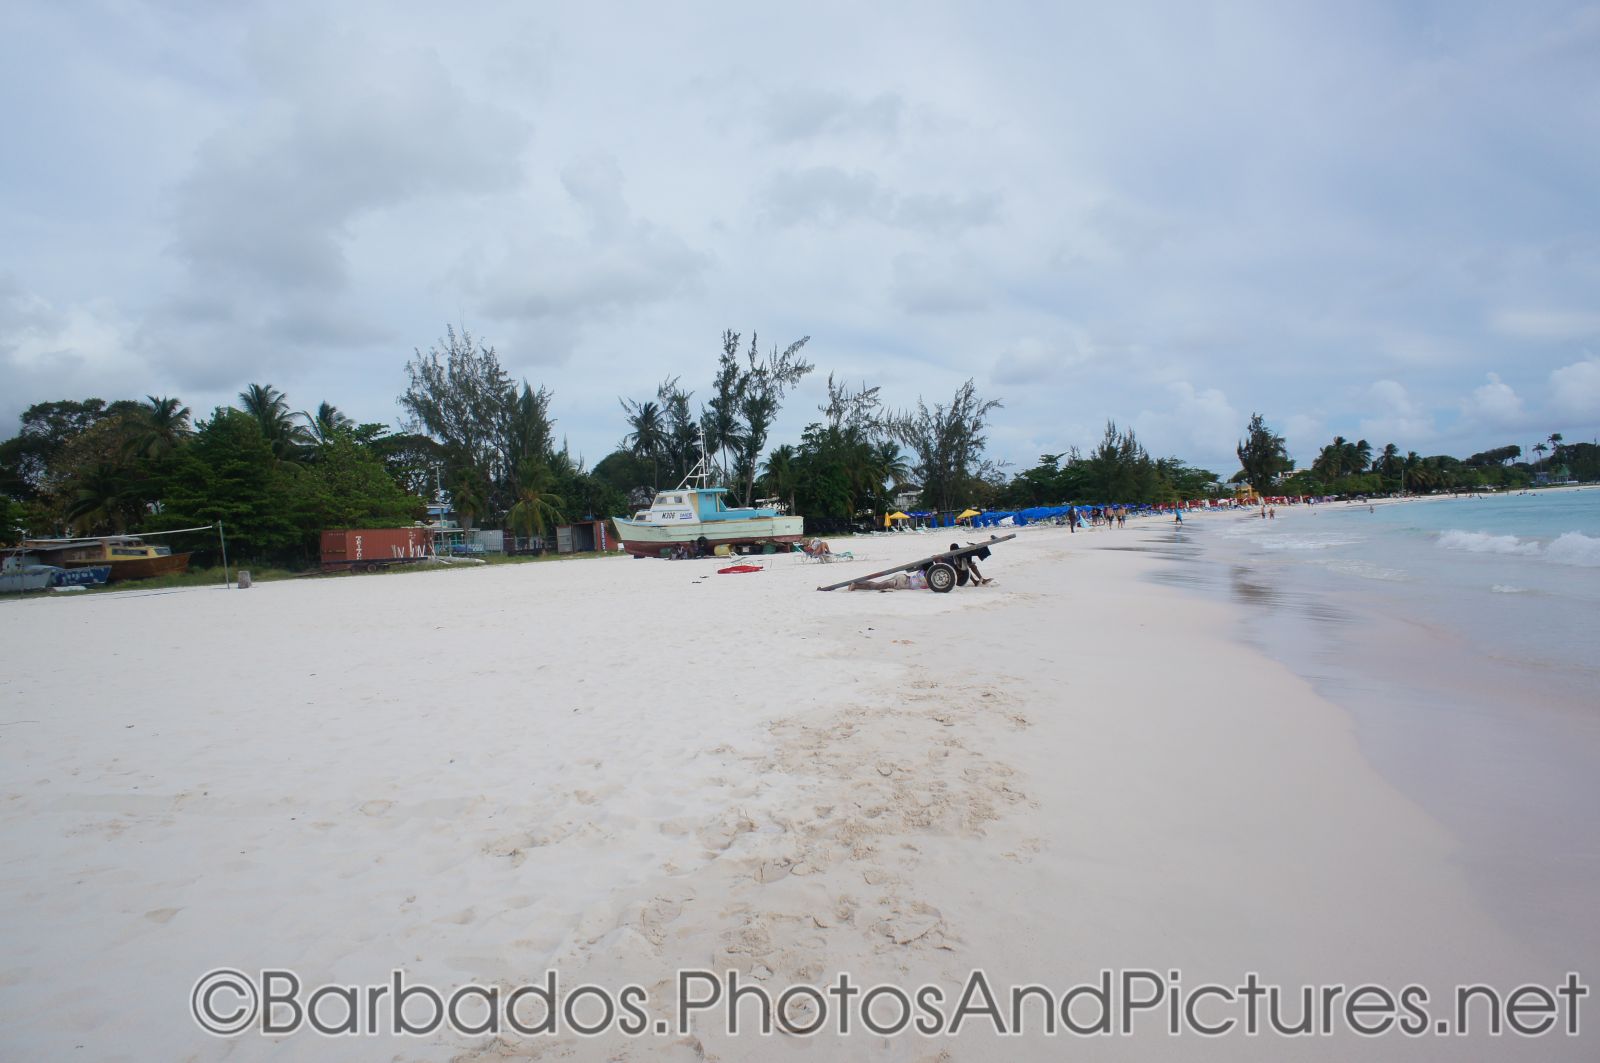 Boat on the sands of Carlisle Bay Beach in Bridgetown Barbados.jpg
